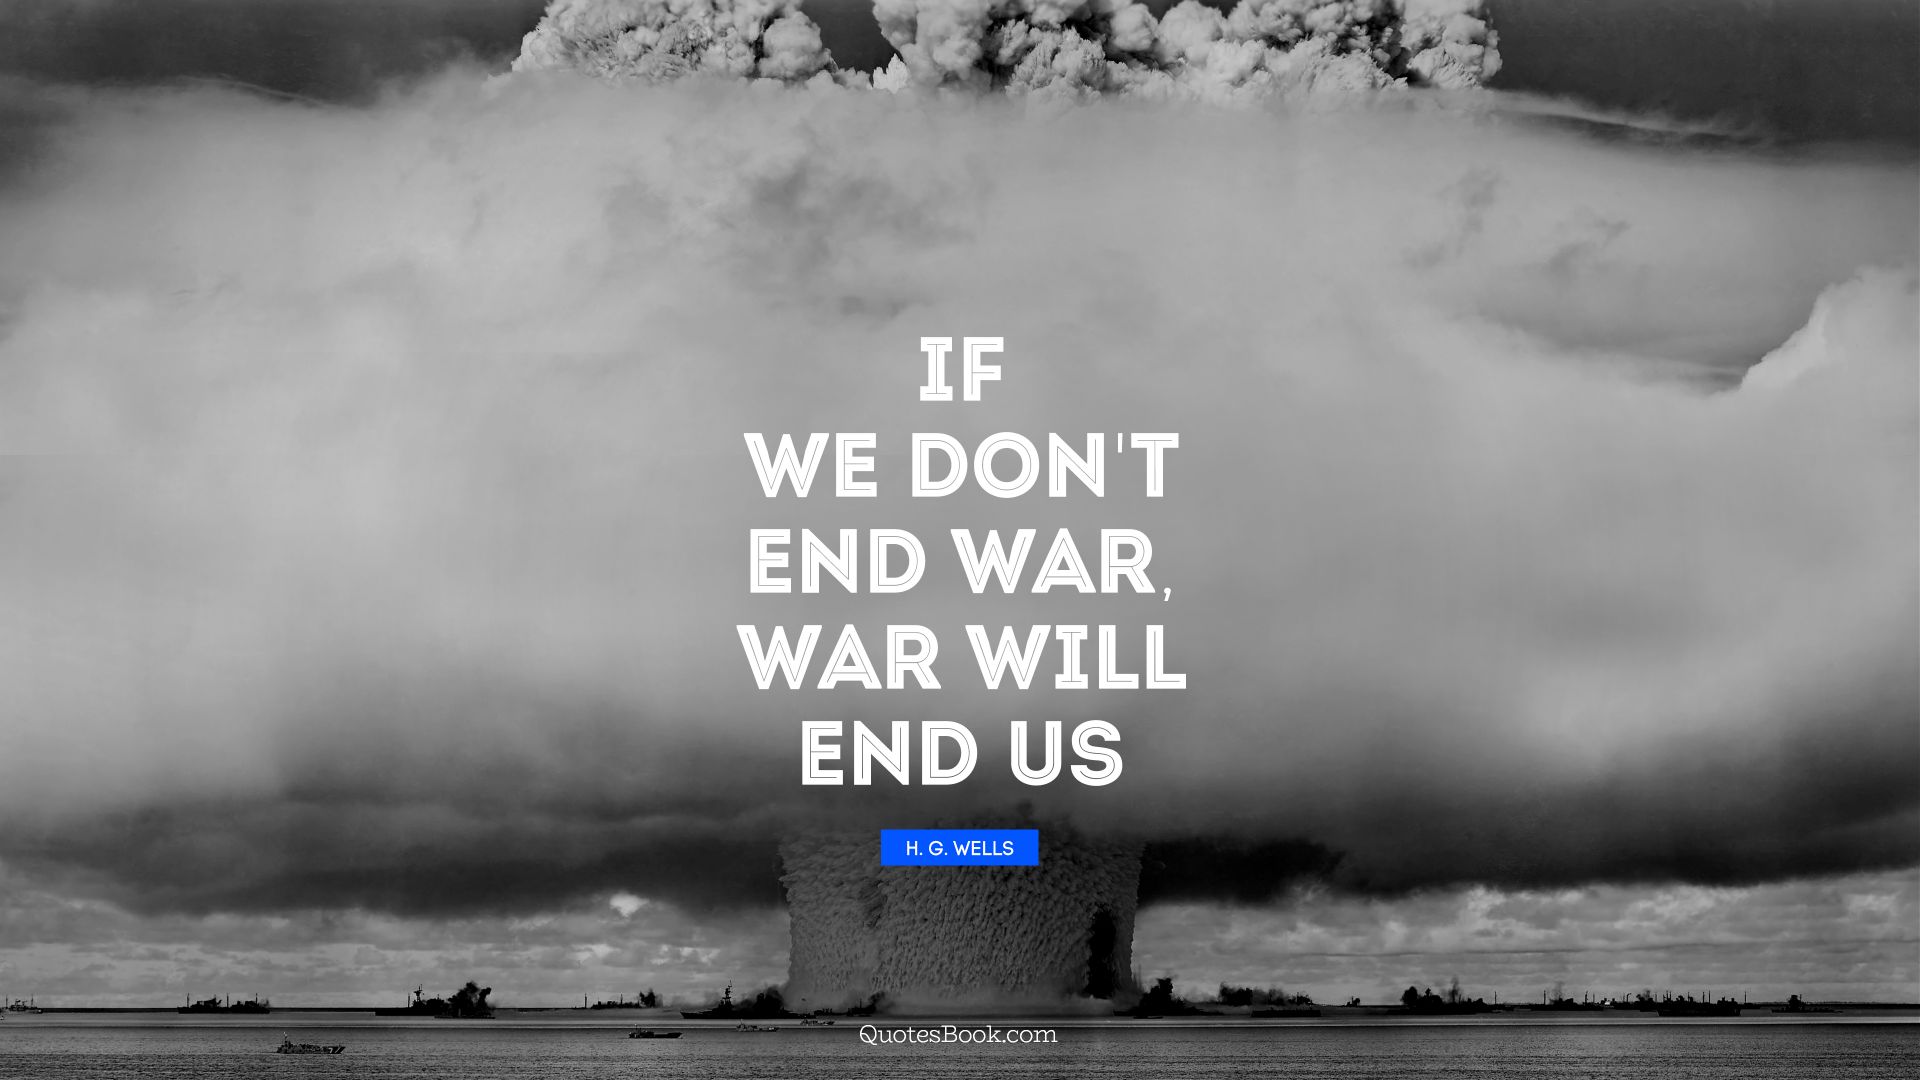 If we don't end war, war will end us. - Quote by H. G. Wells